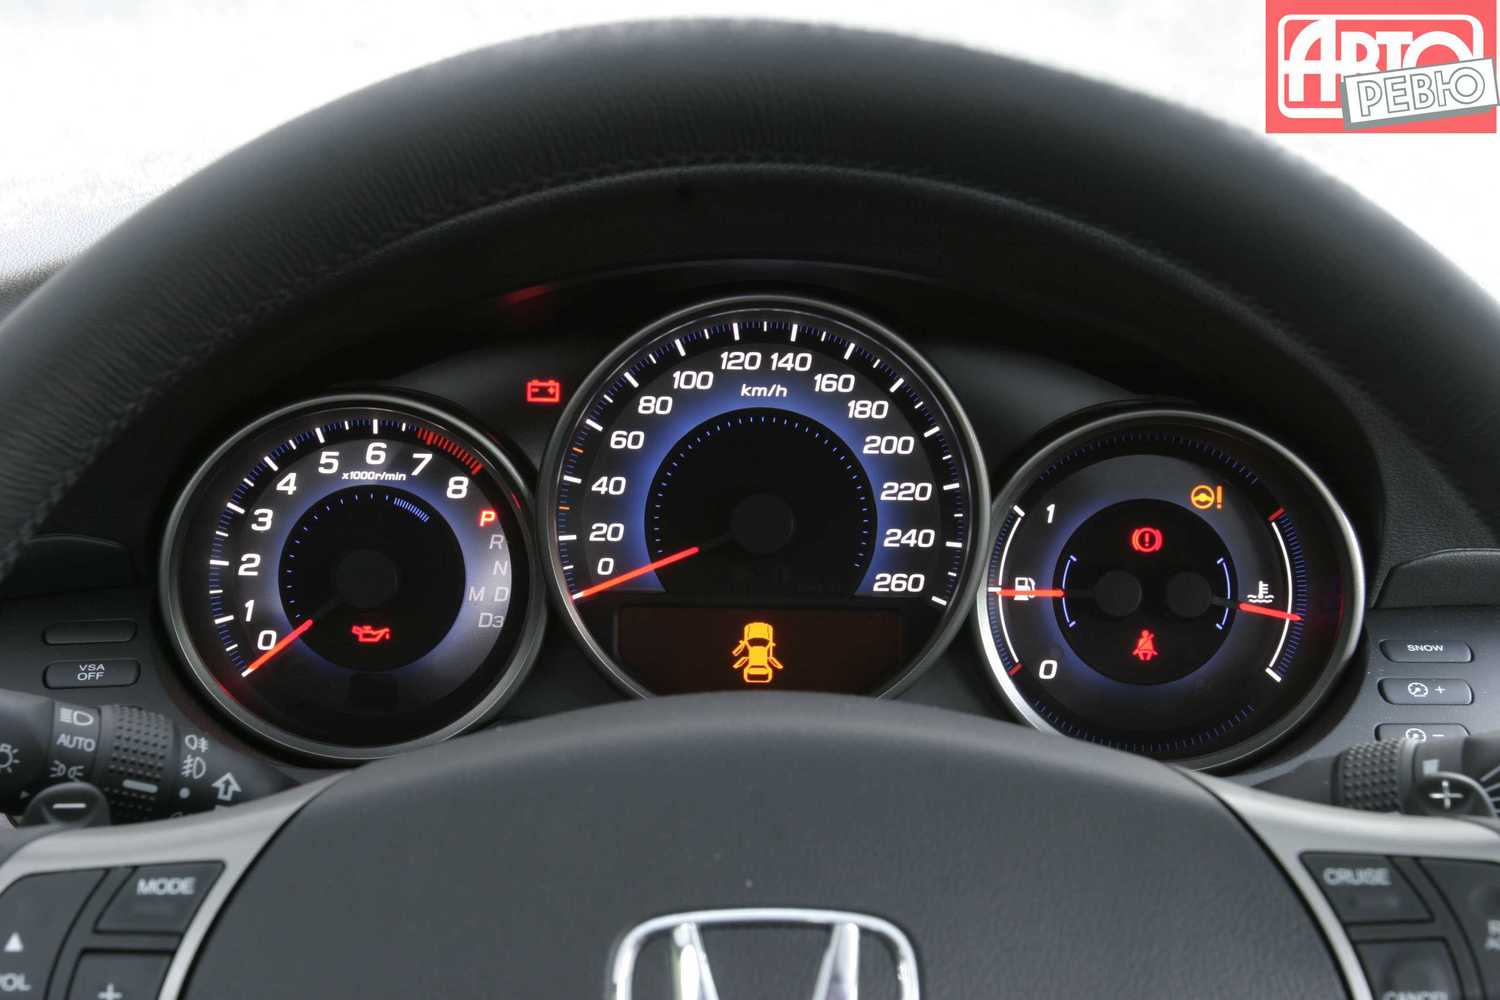 седан Honda Legend 2006 - 2008г выпуска модификация 3,5 VTEC 5AT 3.5 AT (295 л.с.) 4×4